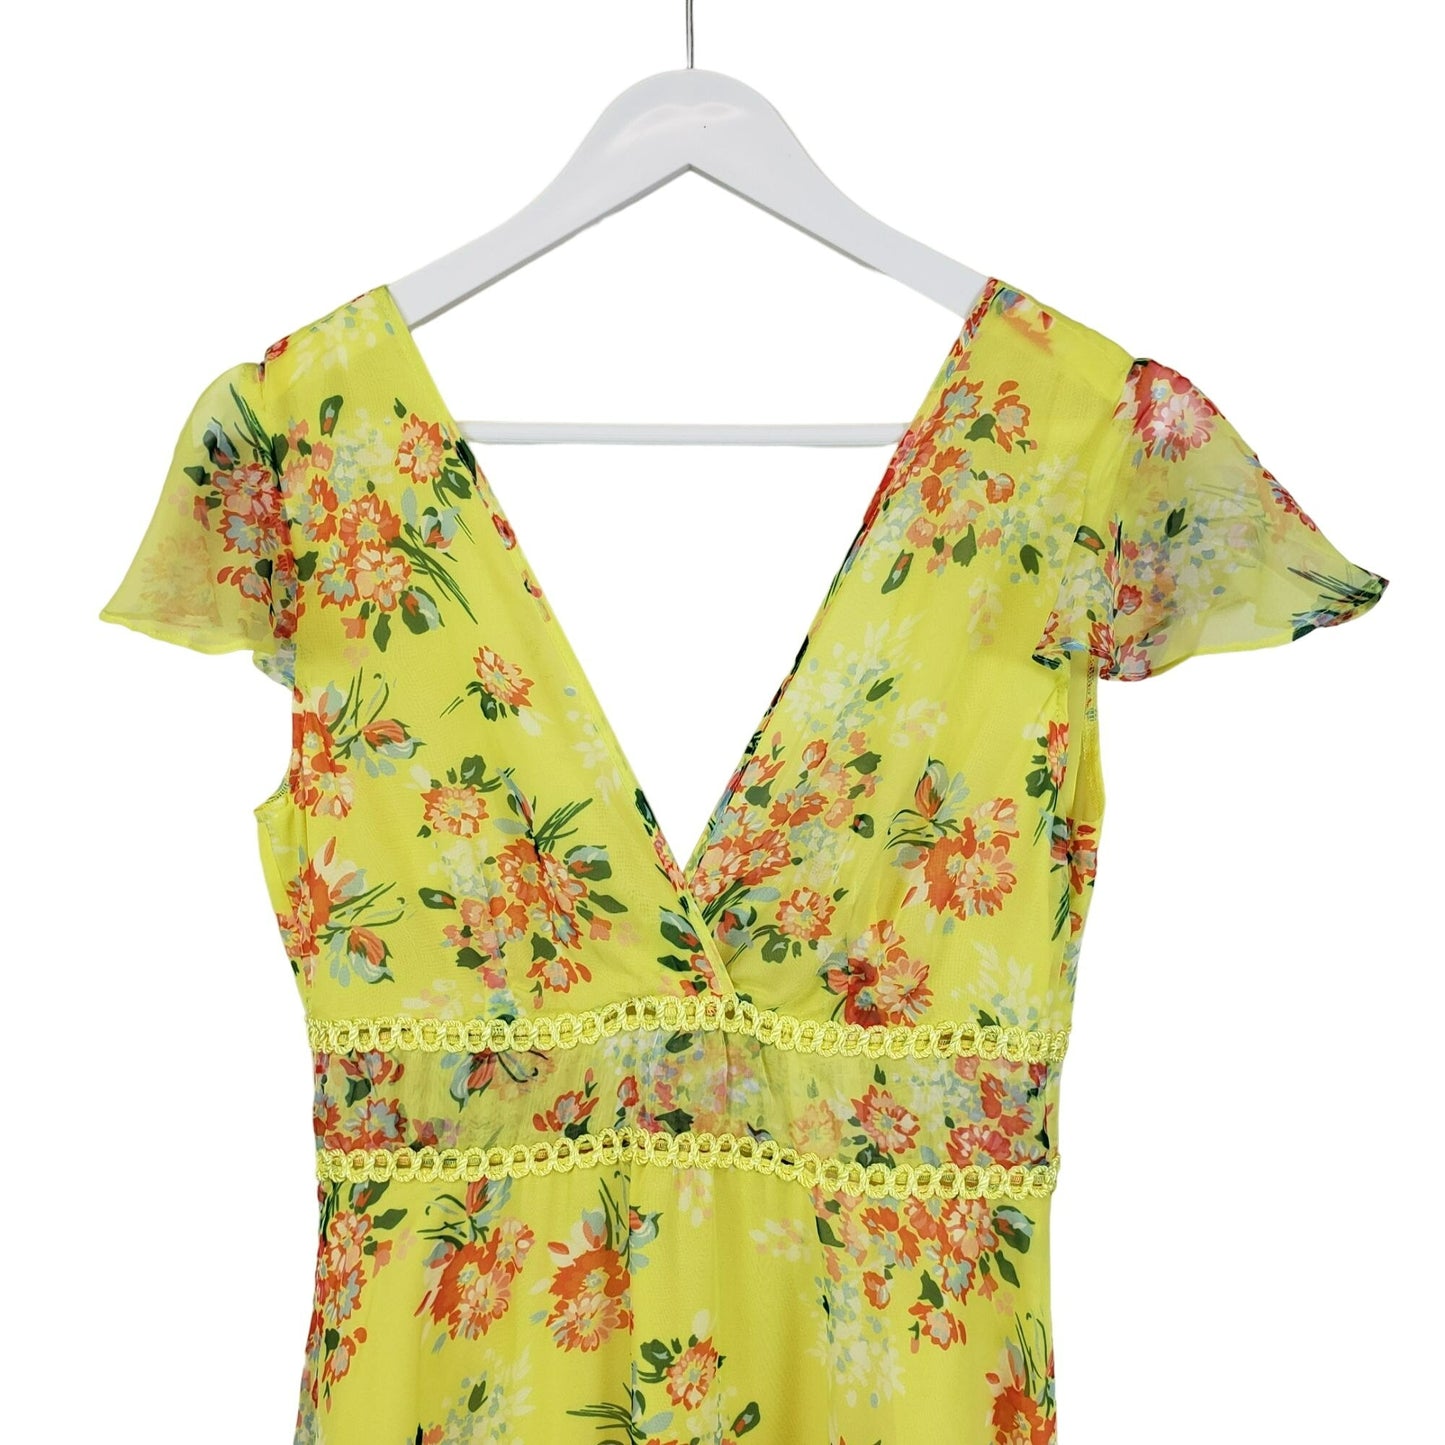 NWT Eywasouls Malibu Kimi Chiffon Floral Maxi Dress Size XS